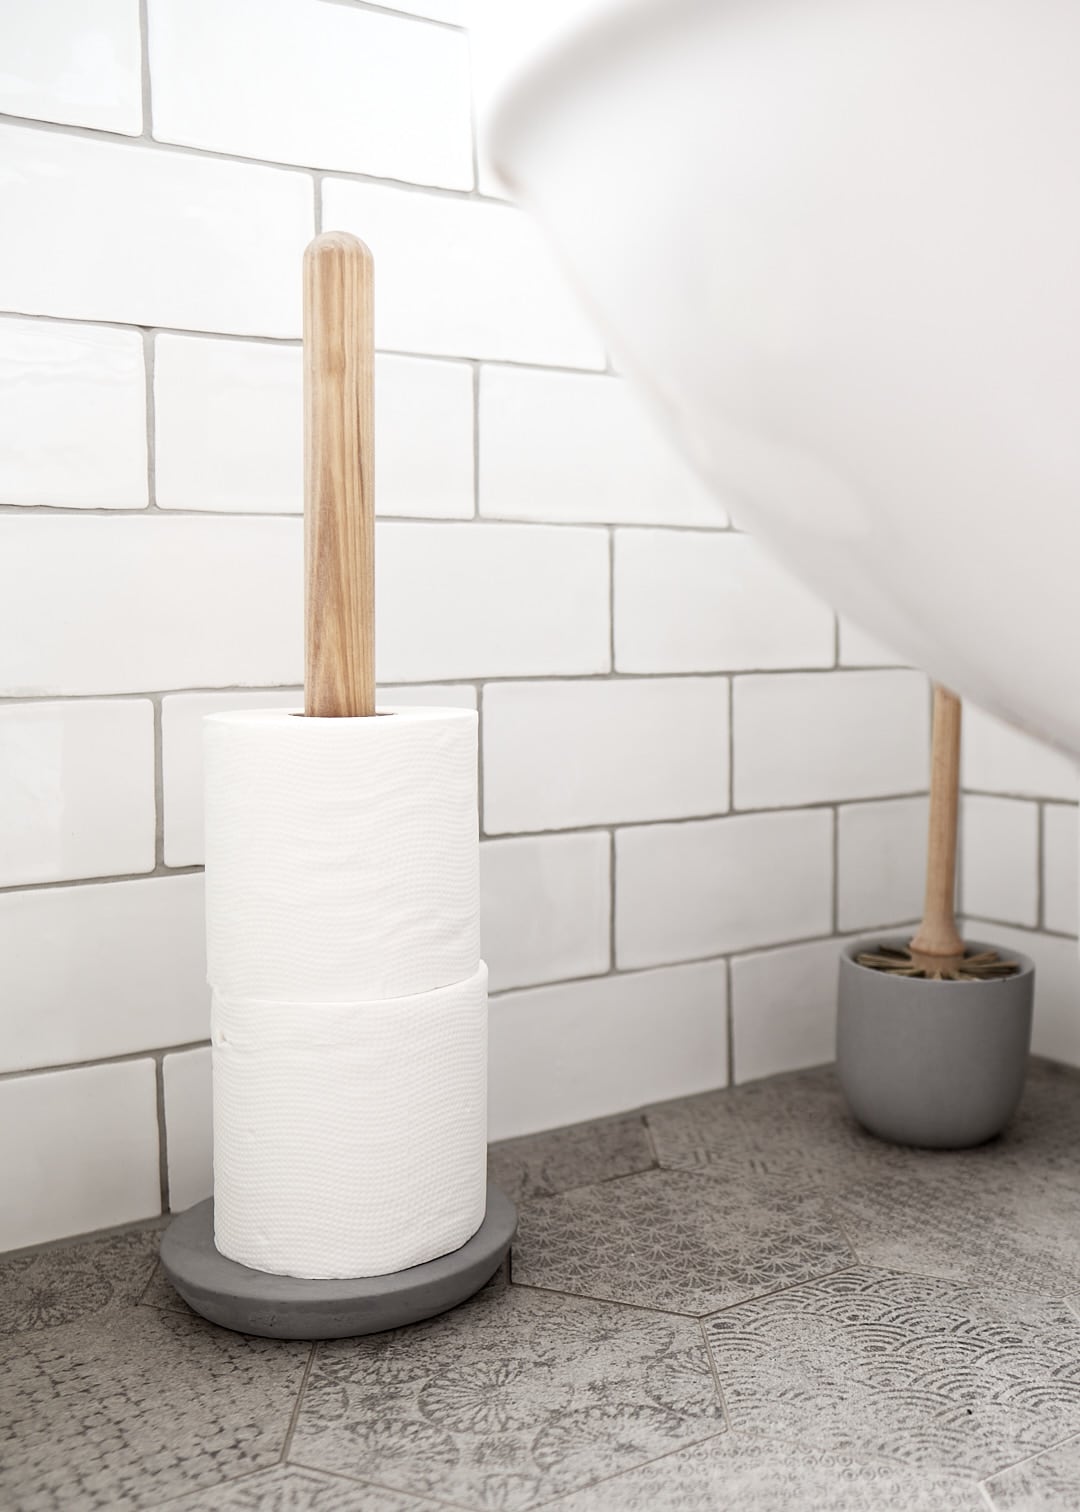 A roll of toilet paper on an Iris Hantverk Toilet Brush + Toilet Roll Holder Set next to a toilet brush in a white-tiled bathroom.